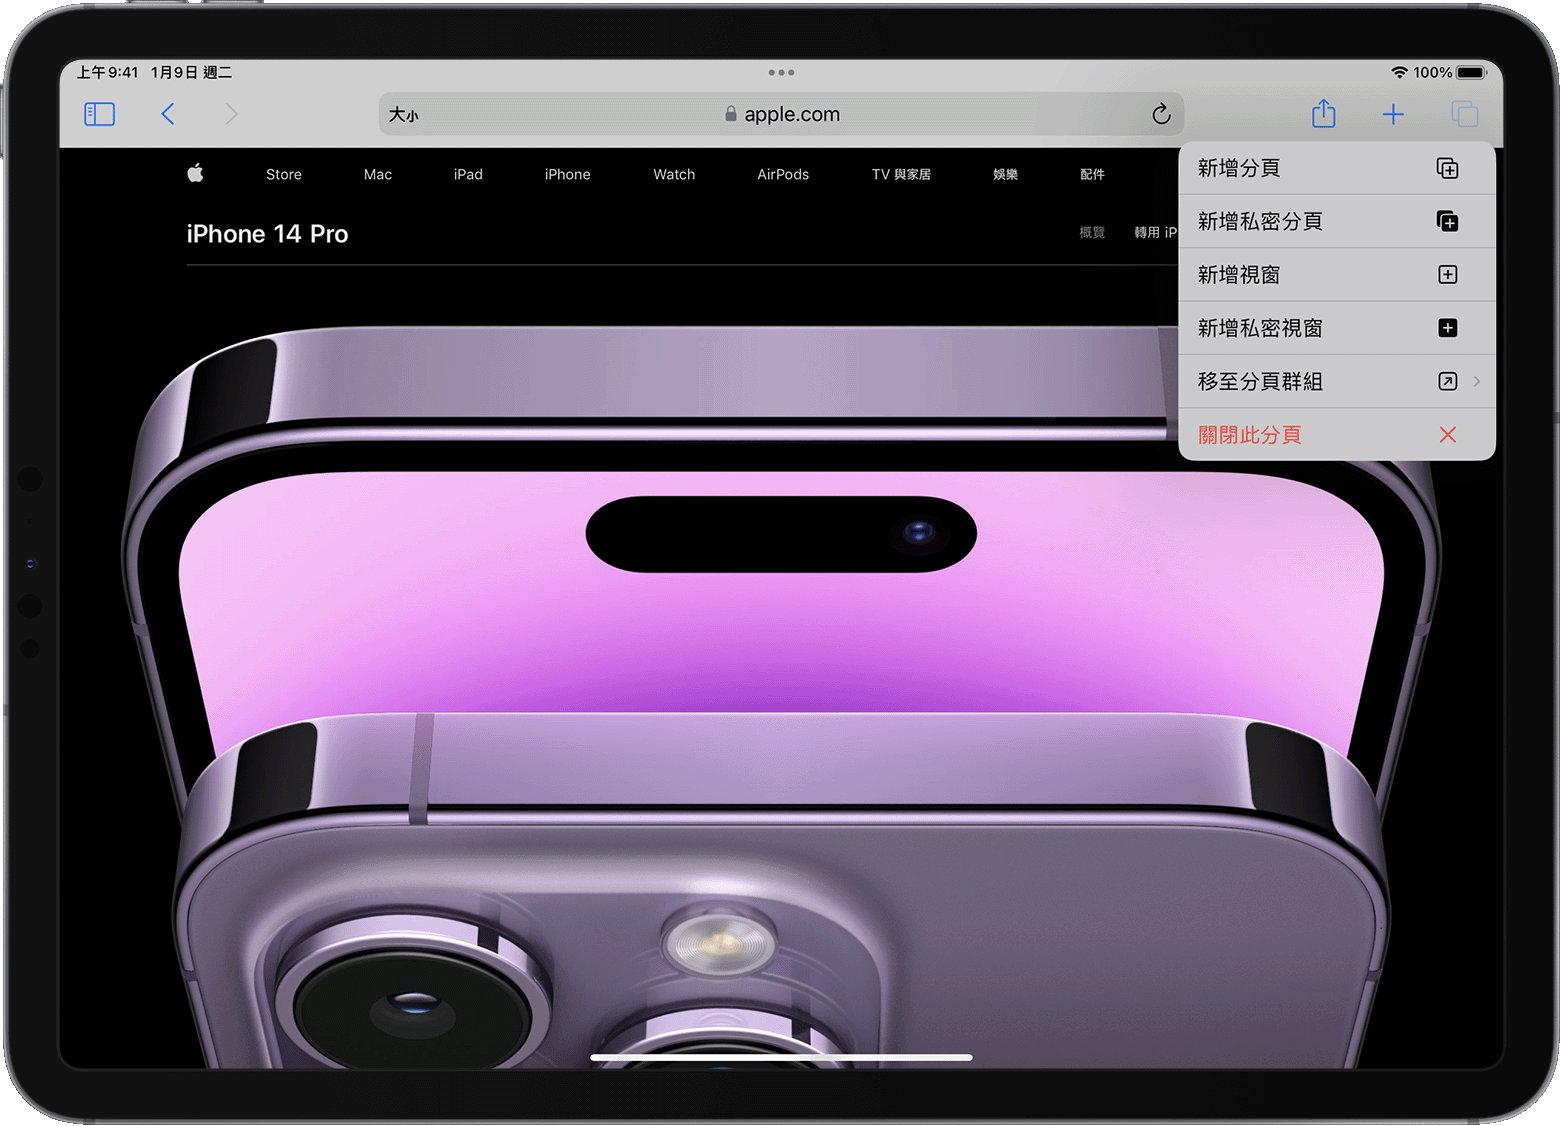 iPad 上開啟了 Safari 分頁選項選單